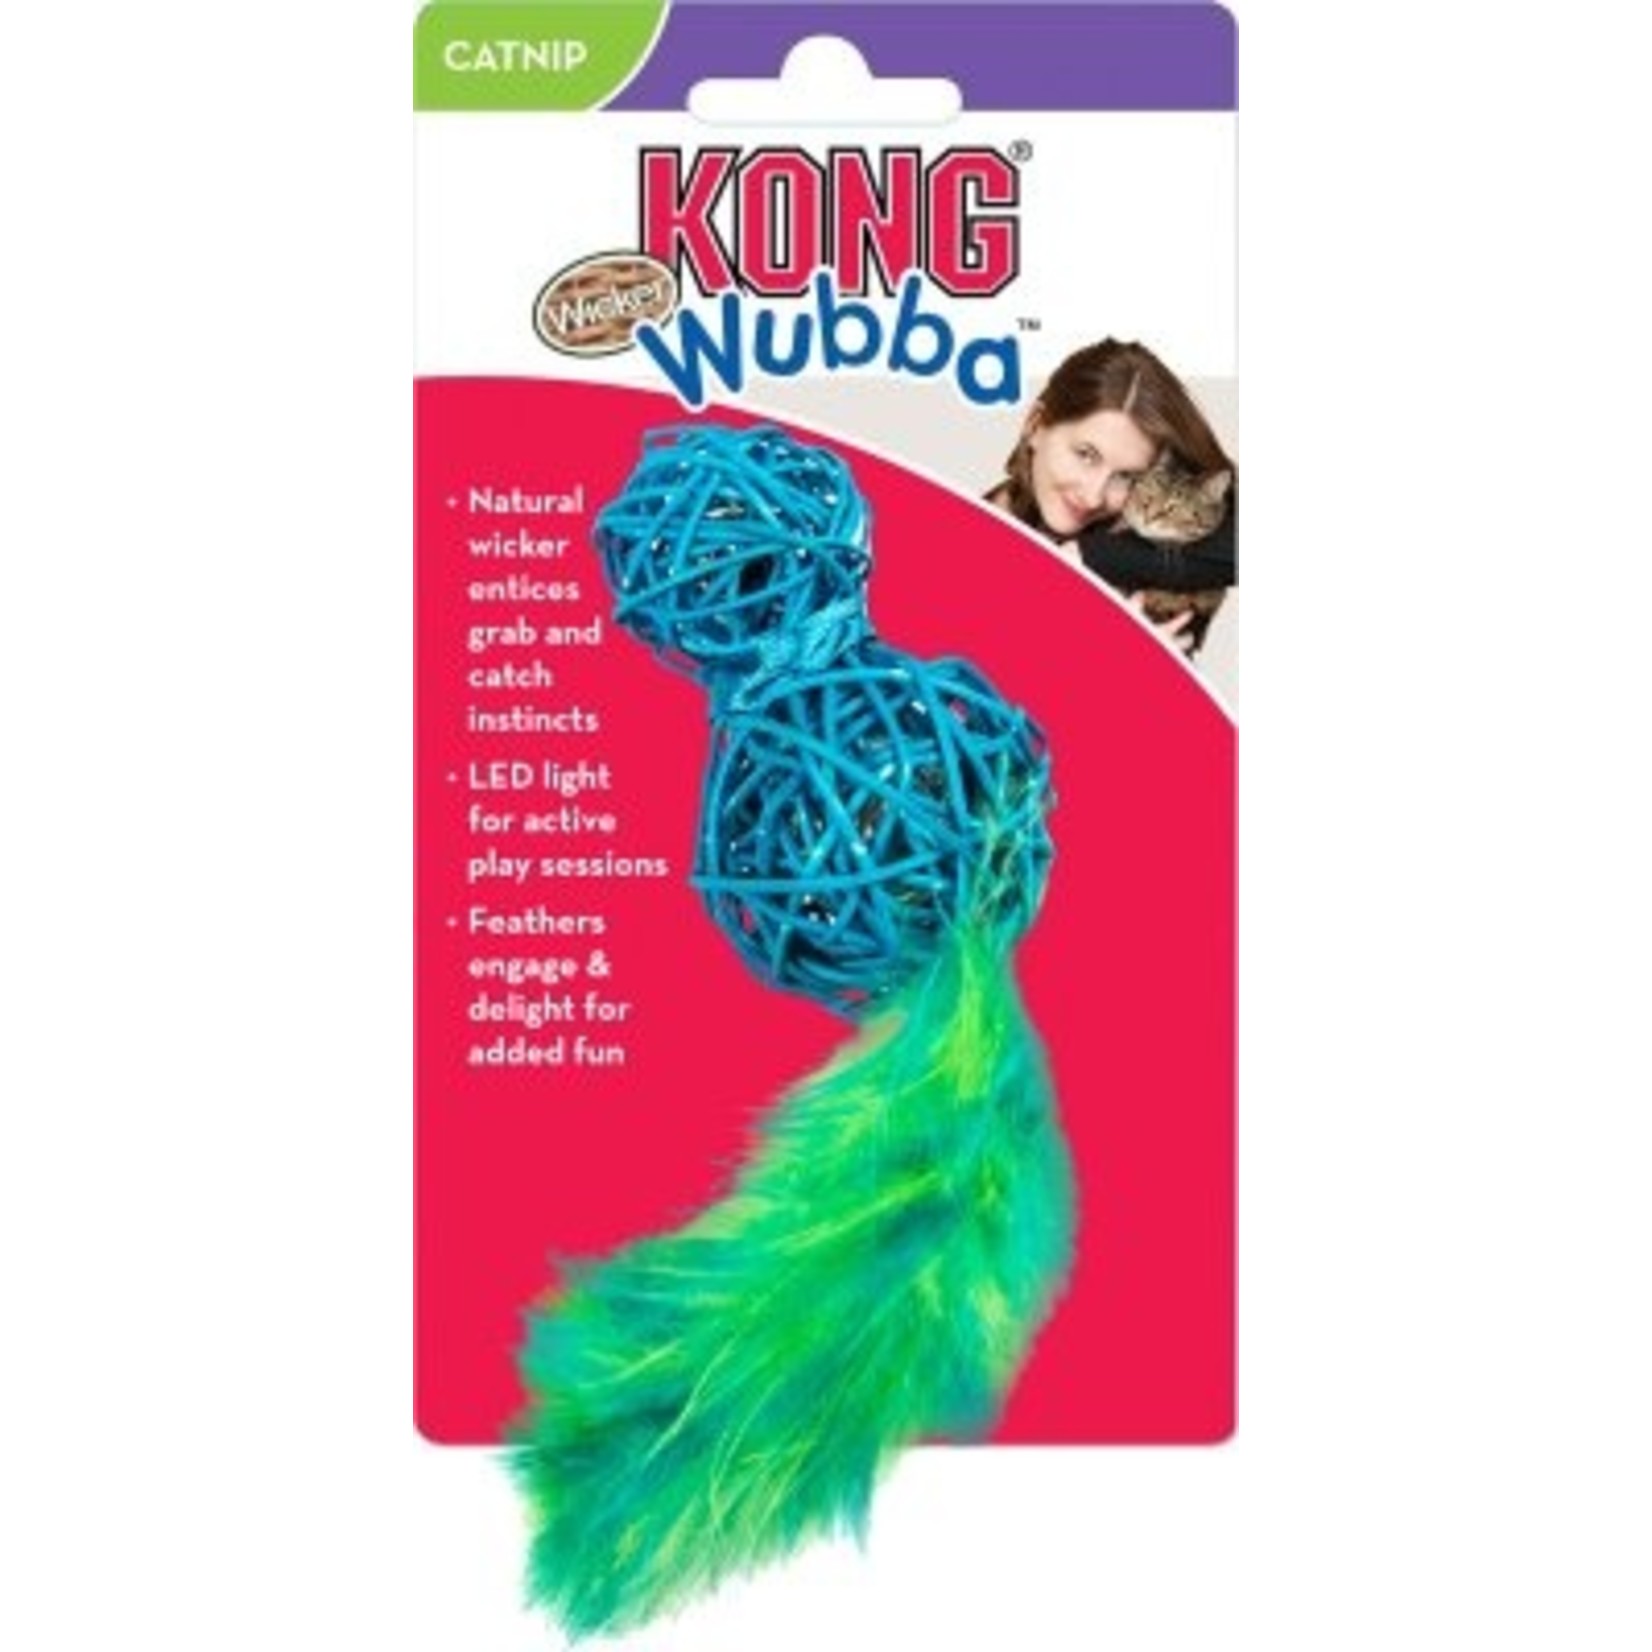 Kong Kong Wubba Cat Toy